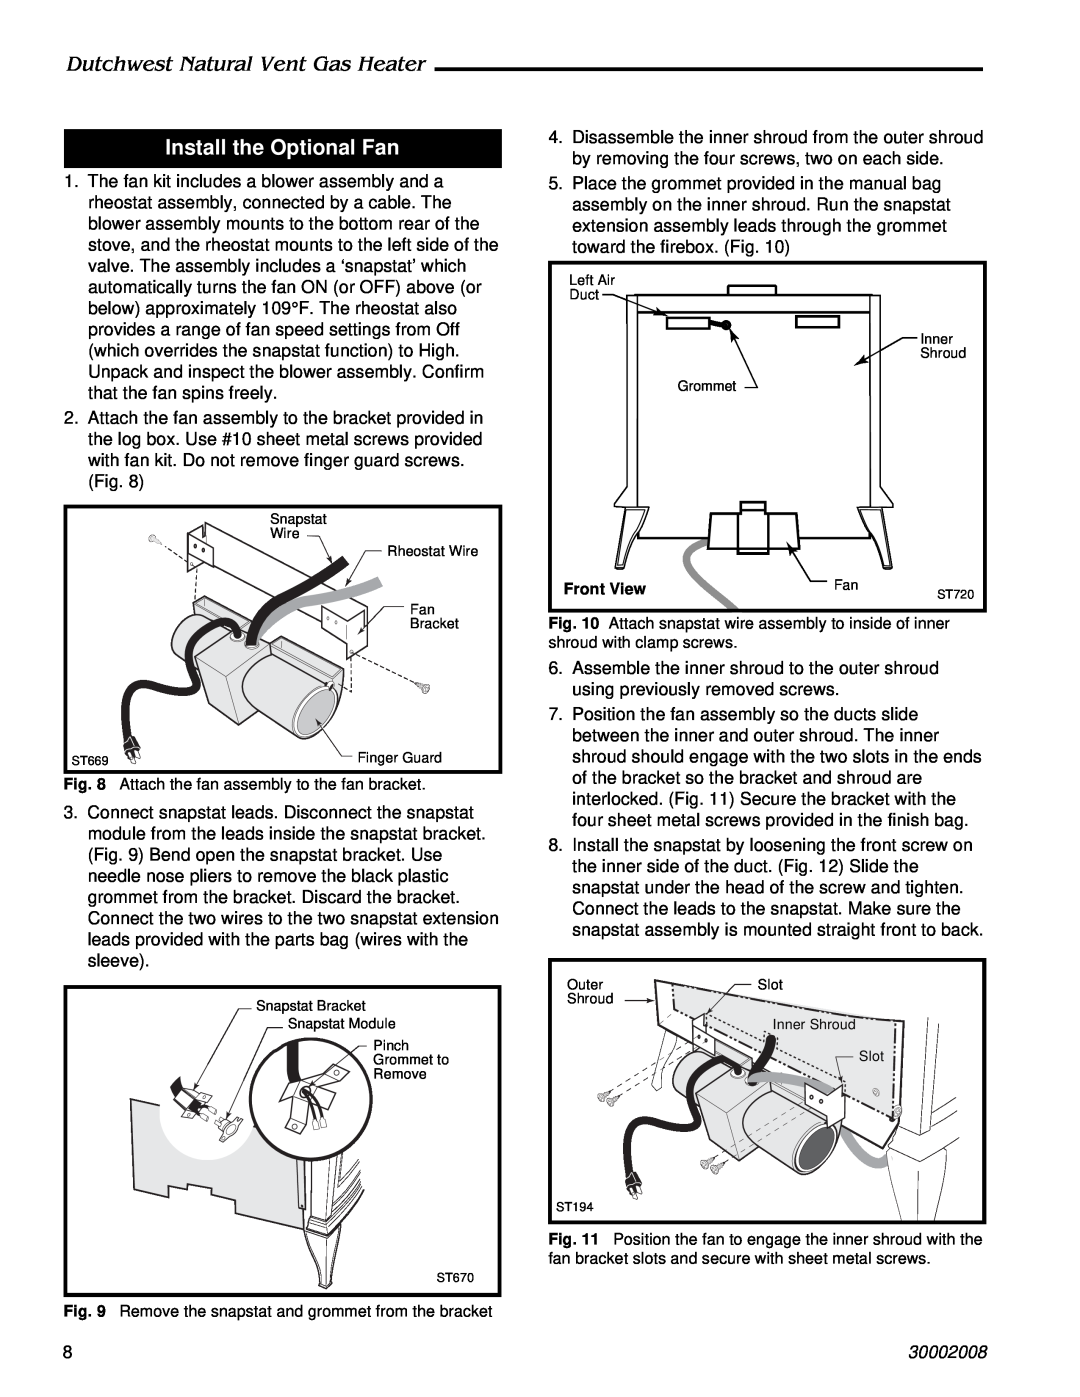 CFM Corporation 2467, 2468 manual Install the Optional Fan, Dutchwest Natural Vent Gas Heater, 30002008 